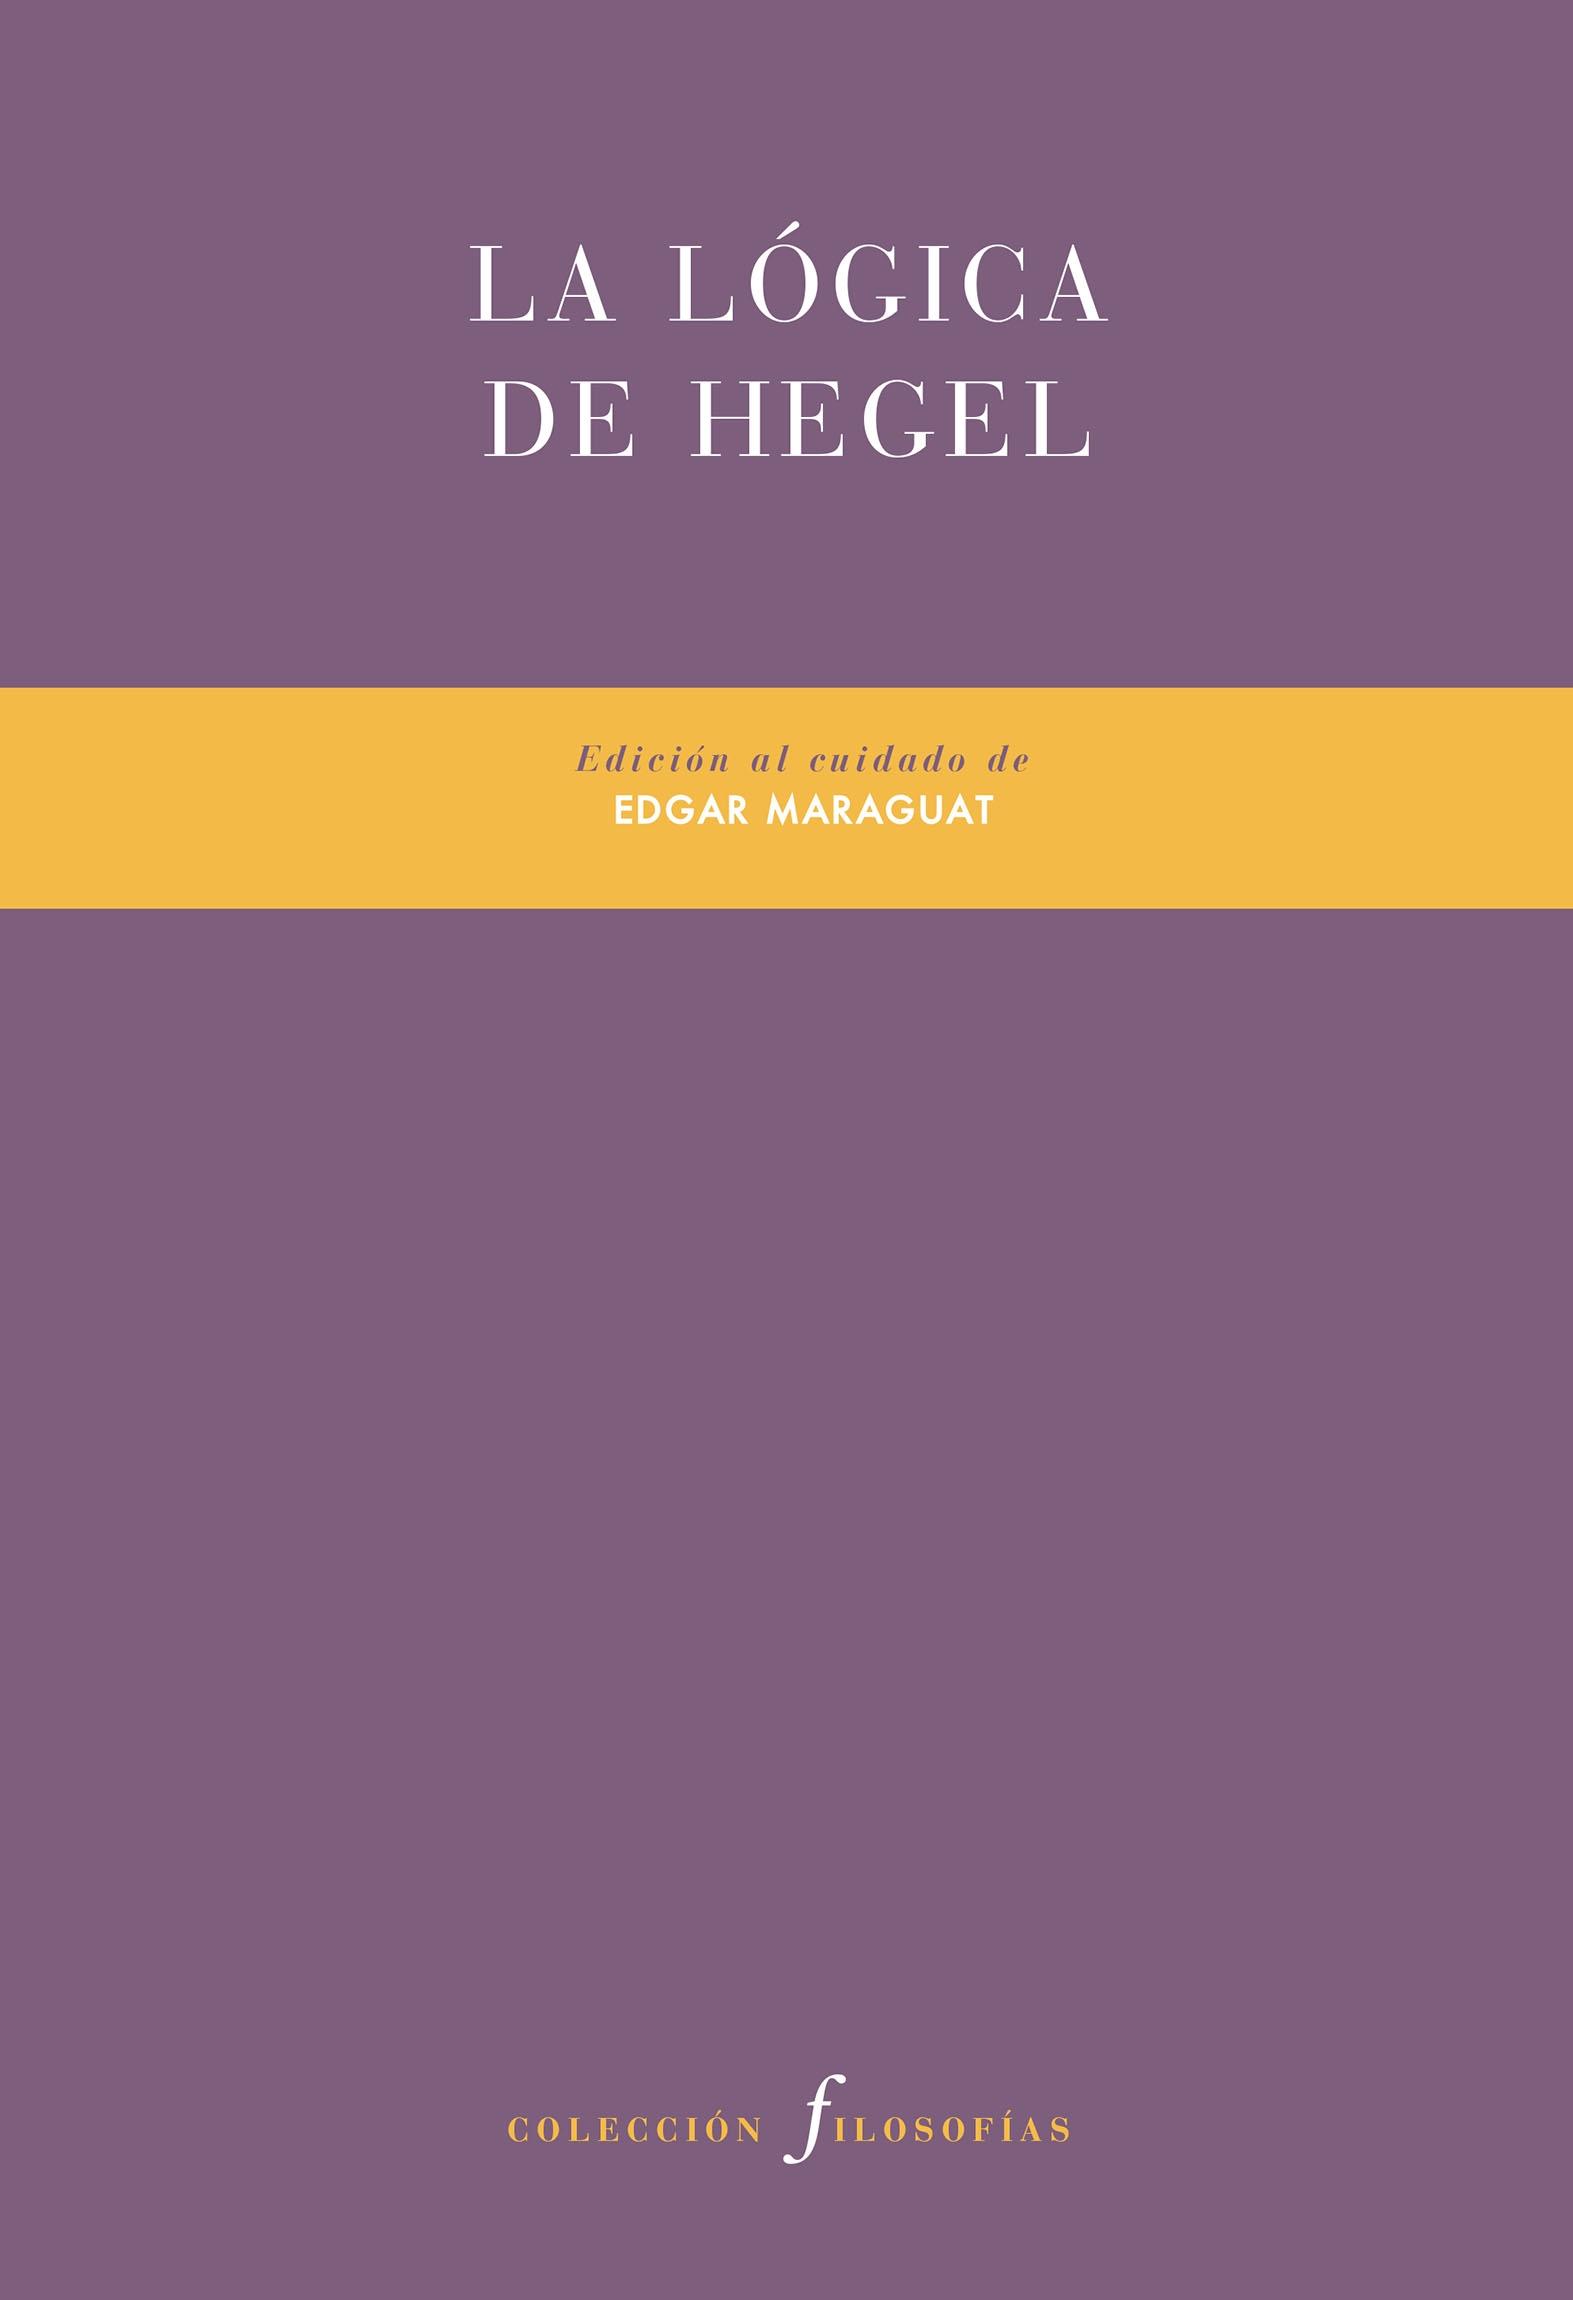 La lógica de Hegel